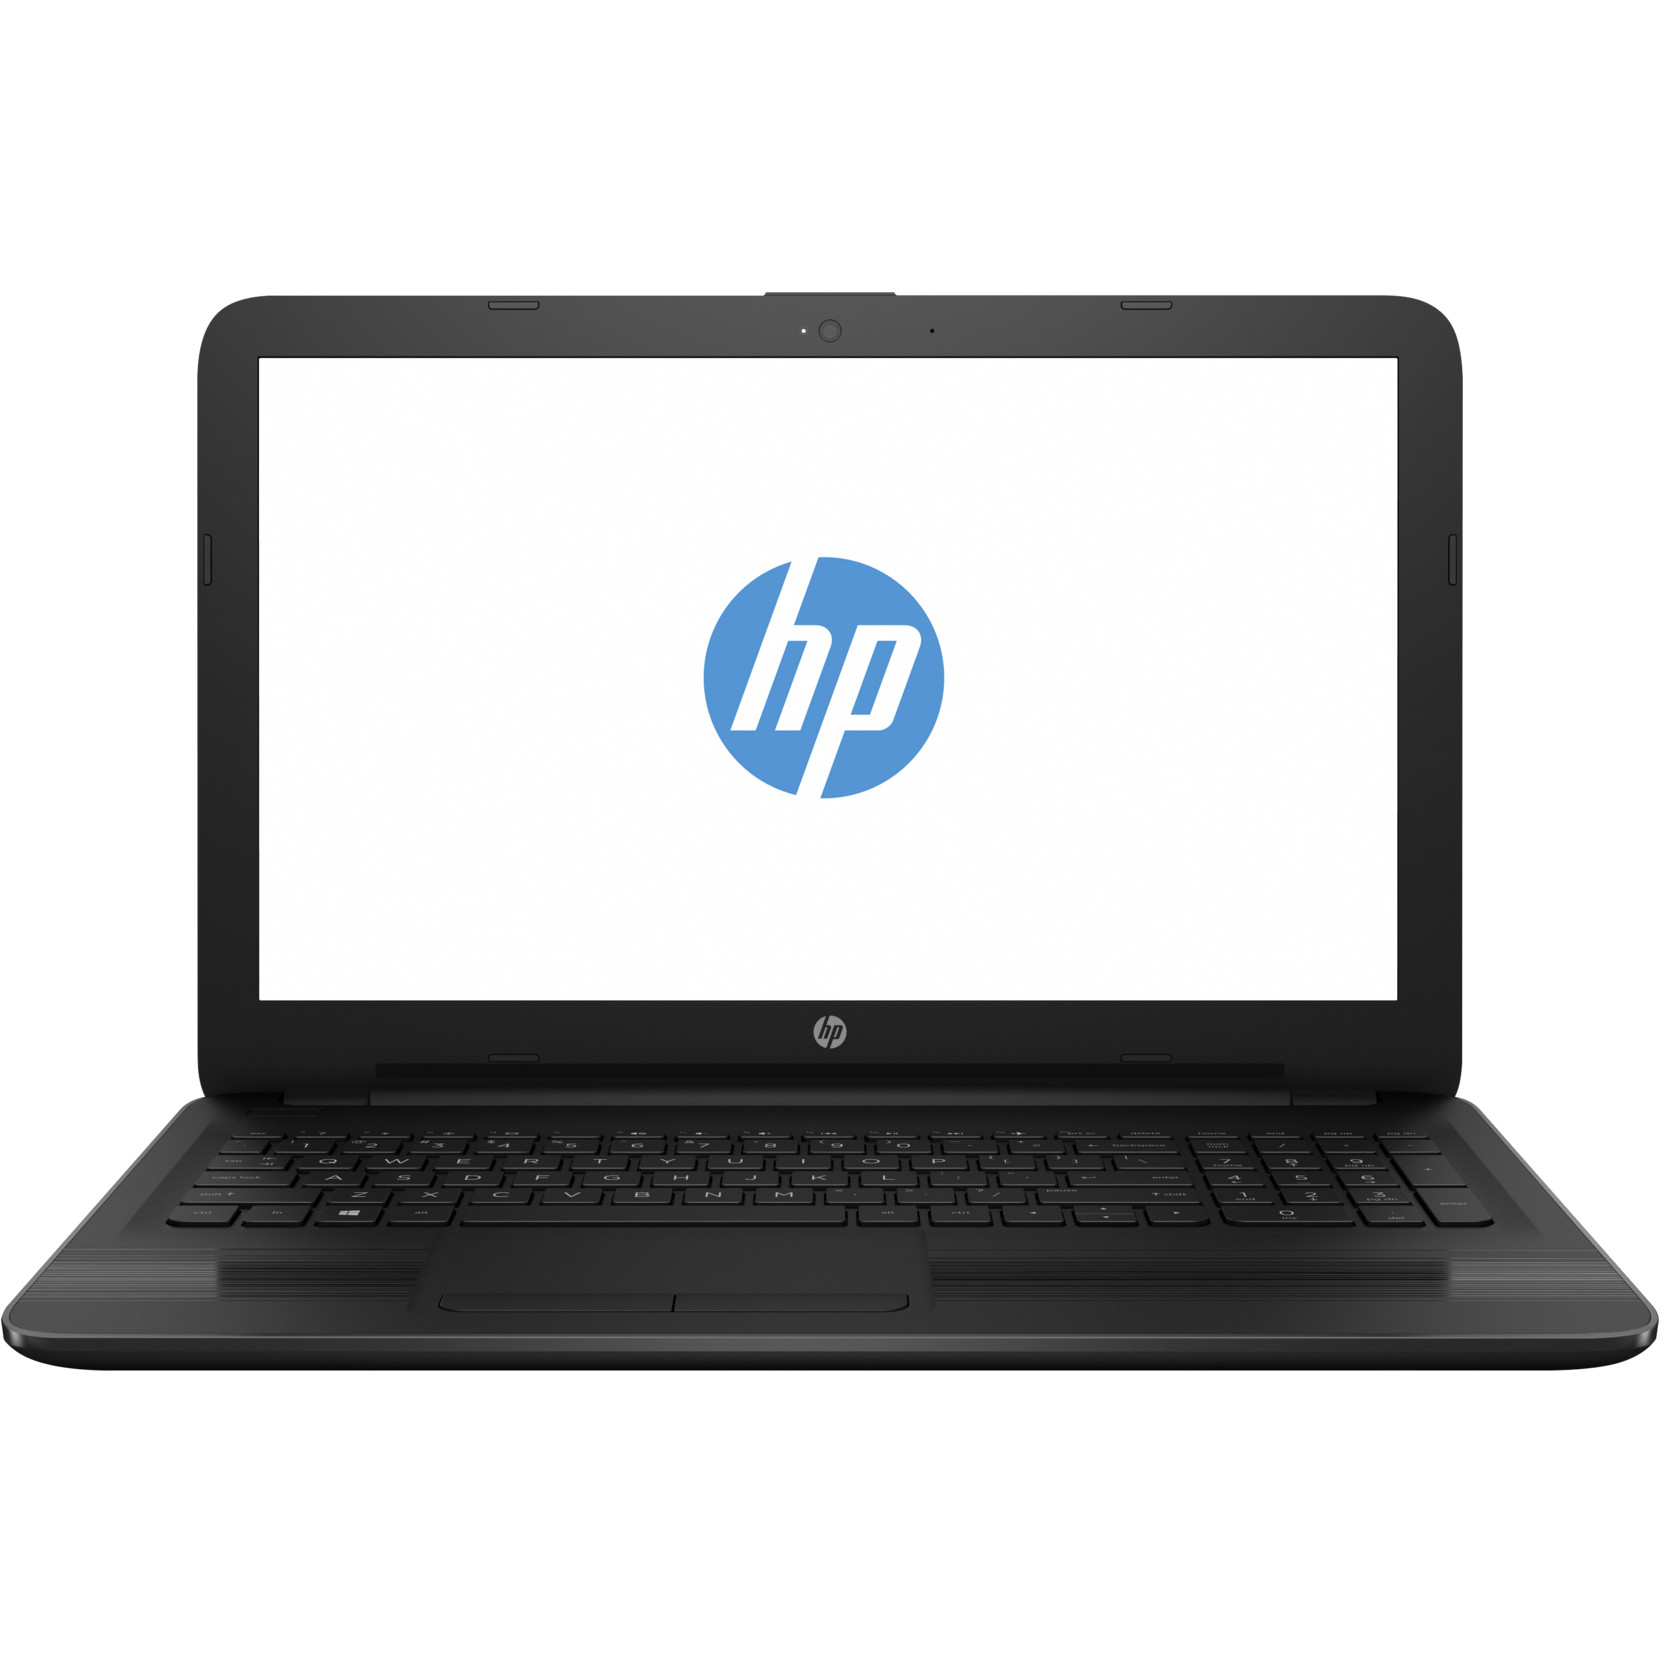 Laptop HP Z9C14EA, Intel Core i3-6006U, 4GB DDR4, HDD 500GB, AMD Radeon R5 M430 2GB, Free DOS